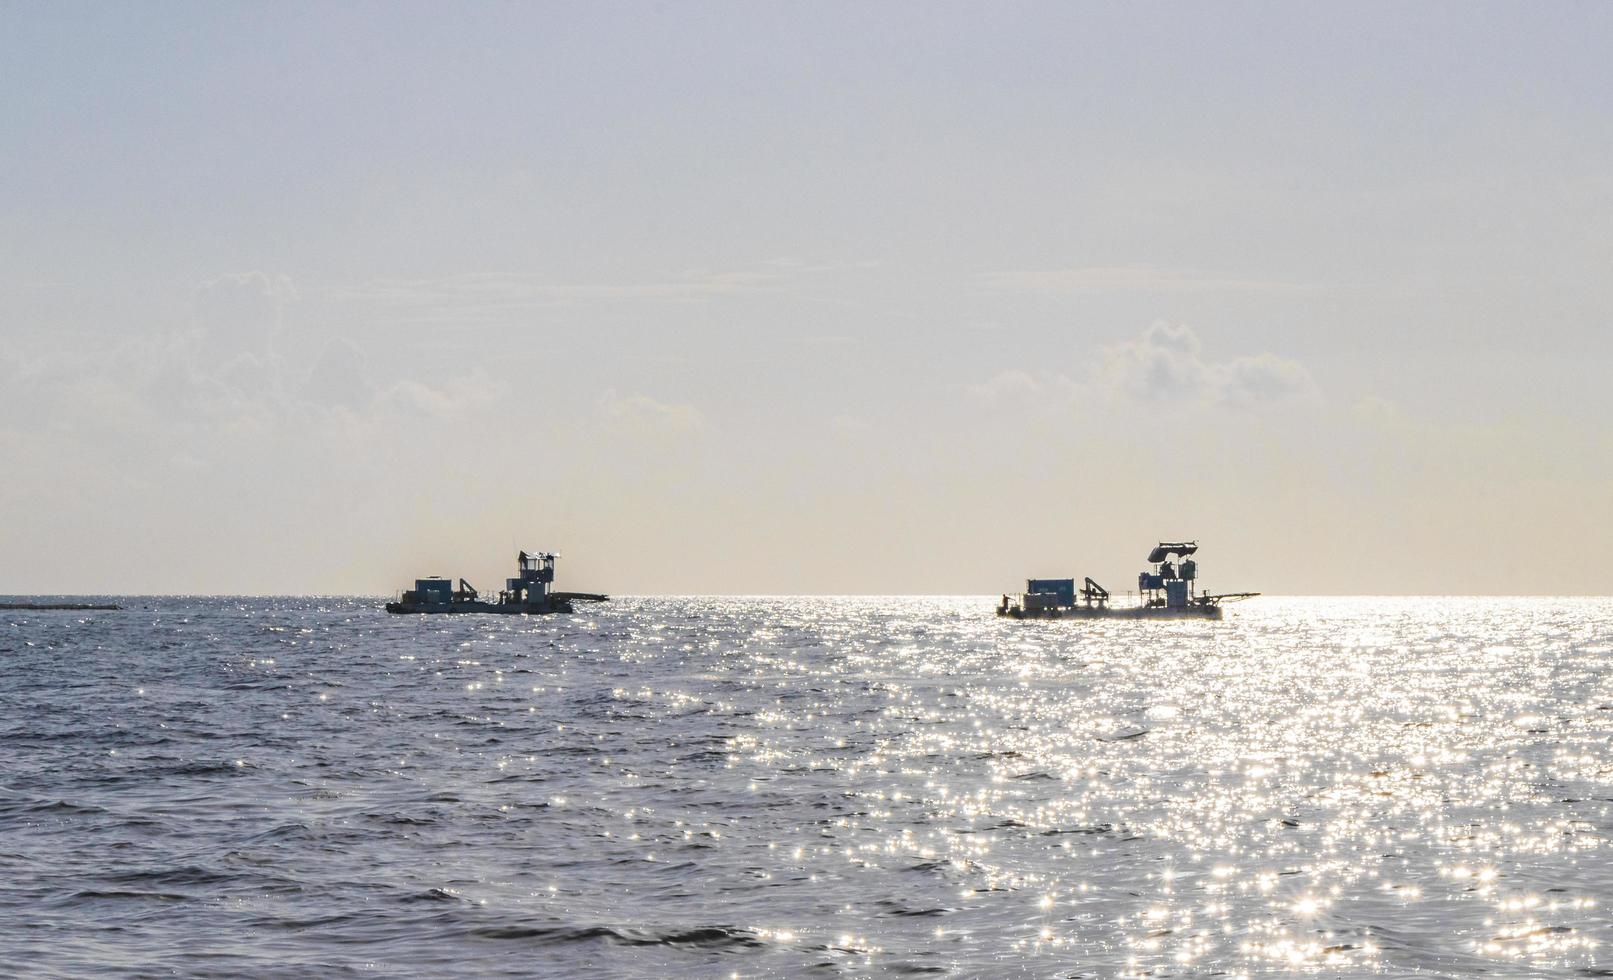 barcos de pesca en la playa tropical mexicana playa del carmen mexico. foto